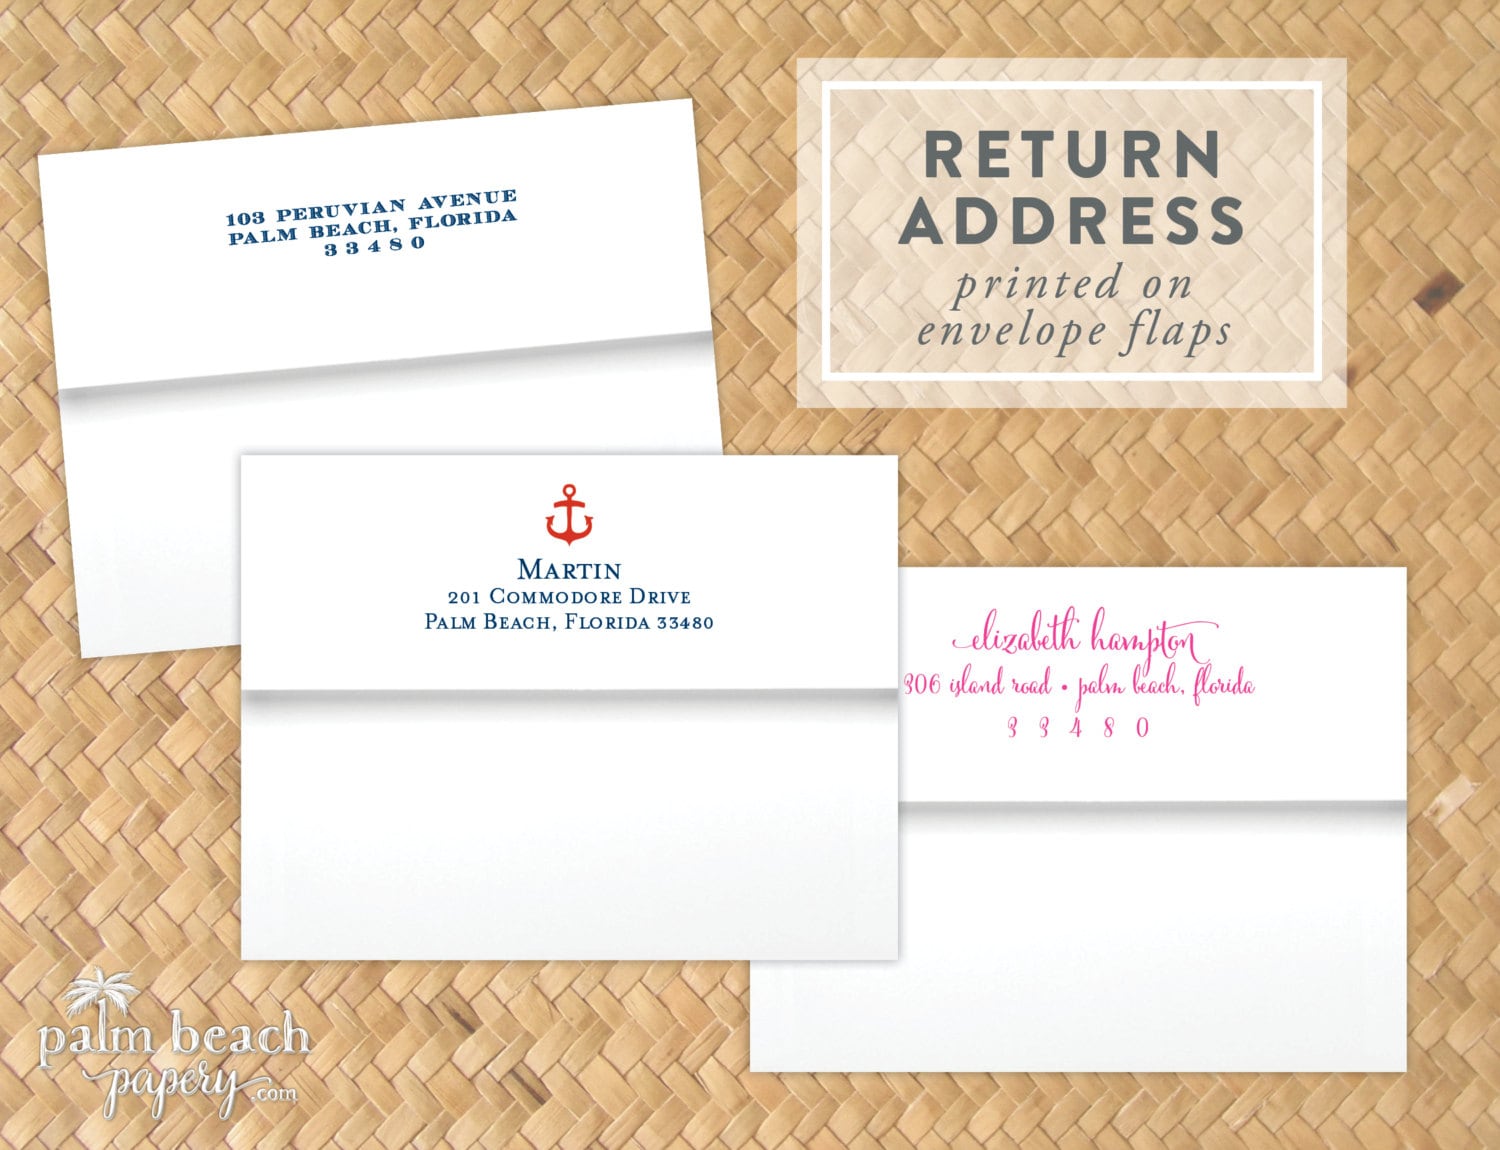 address on envelope